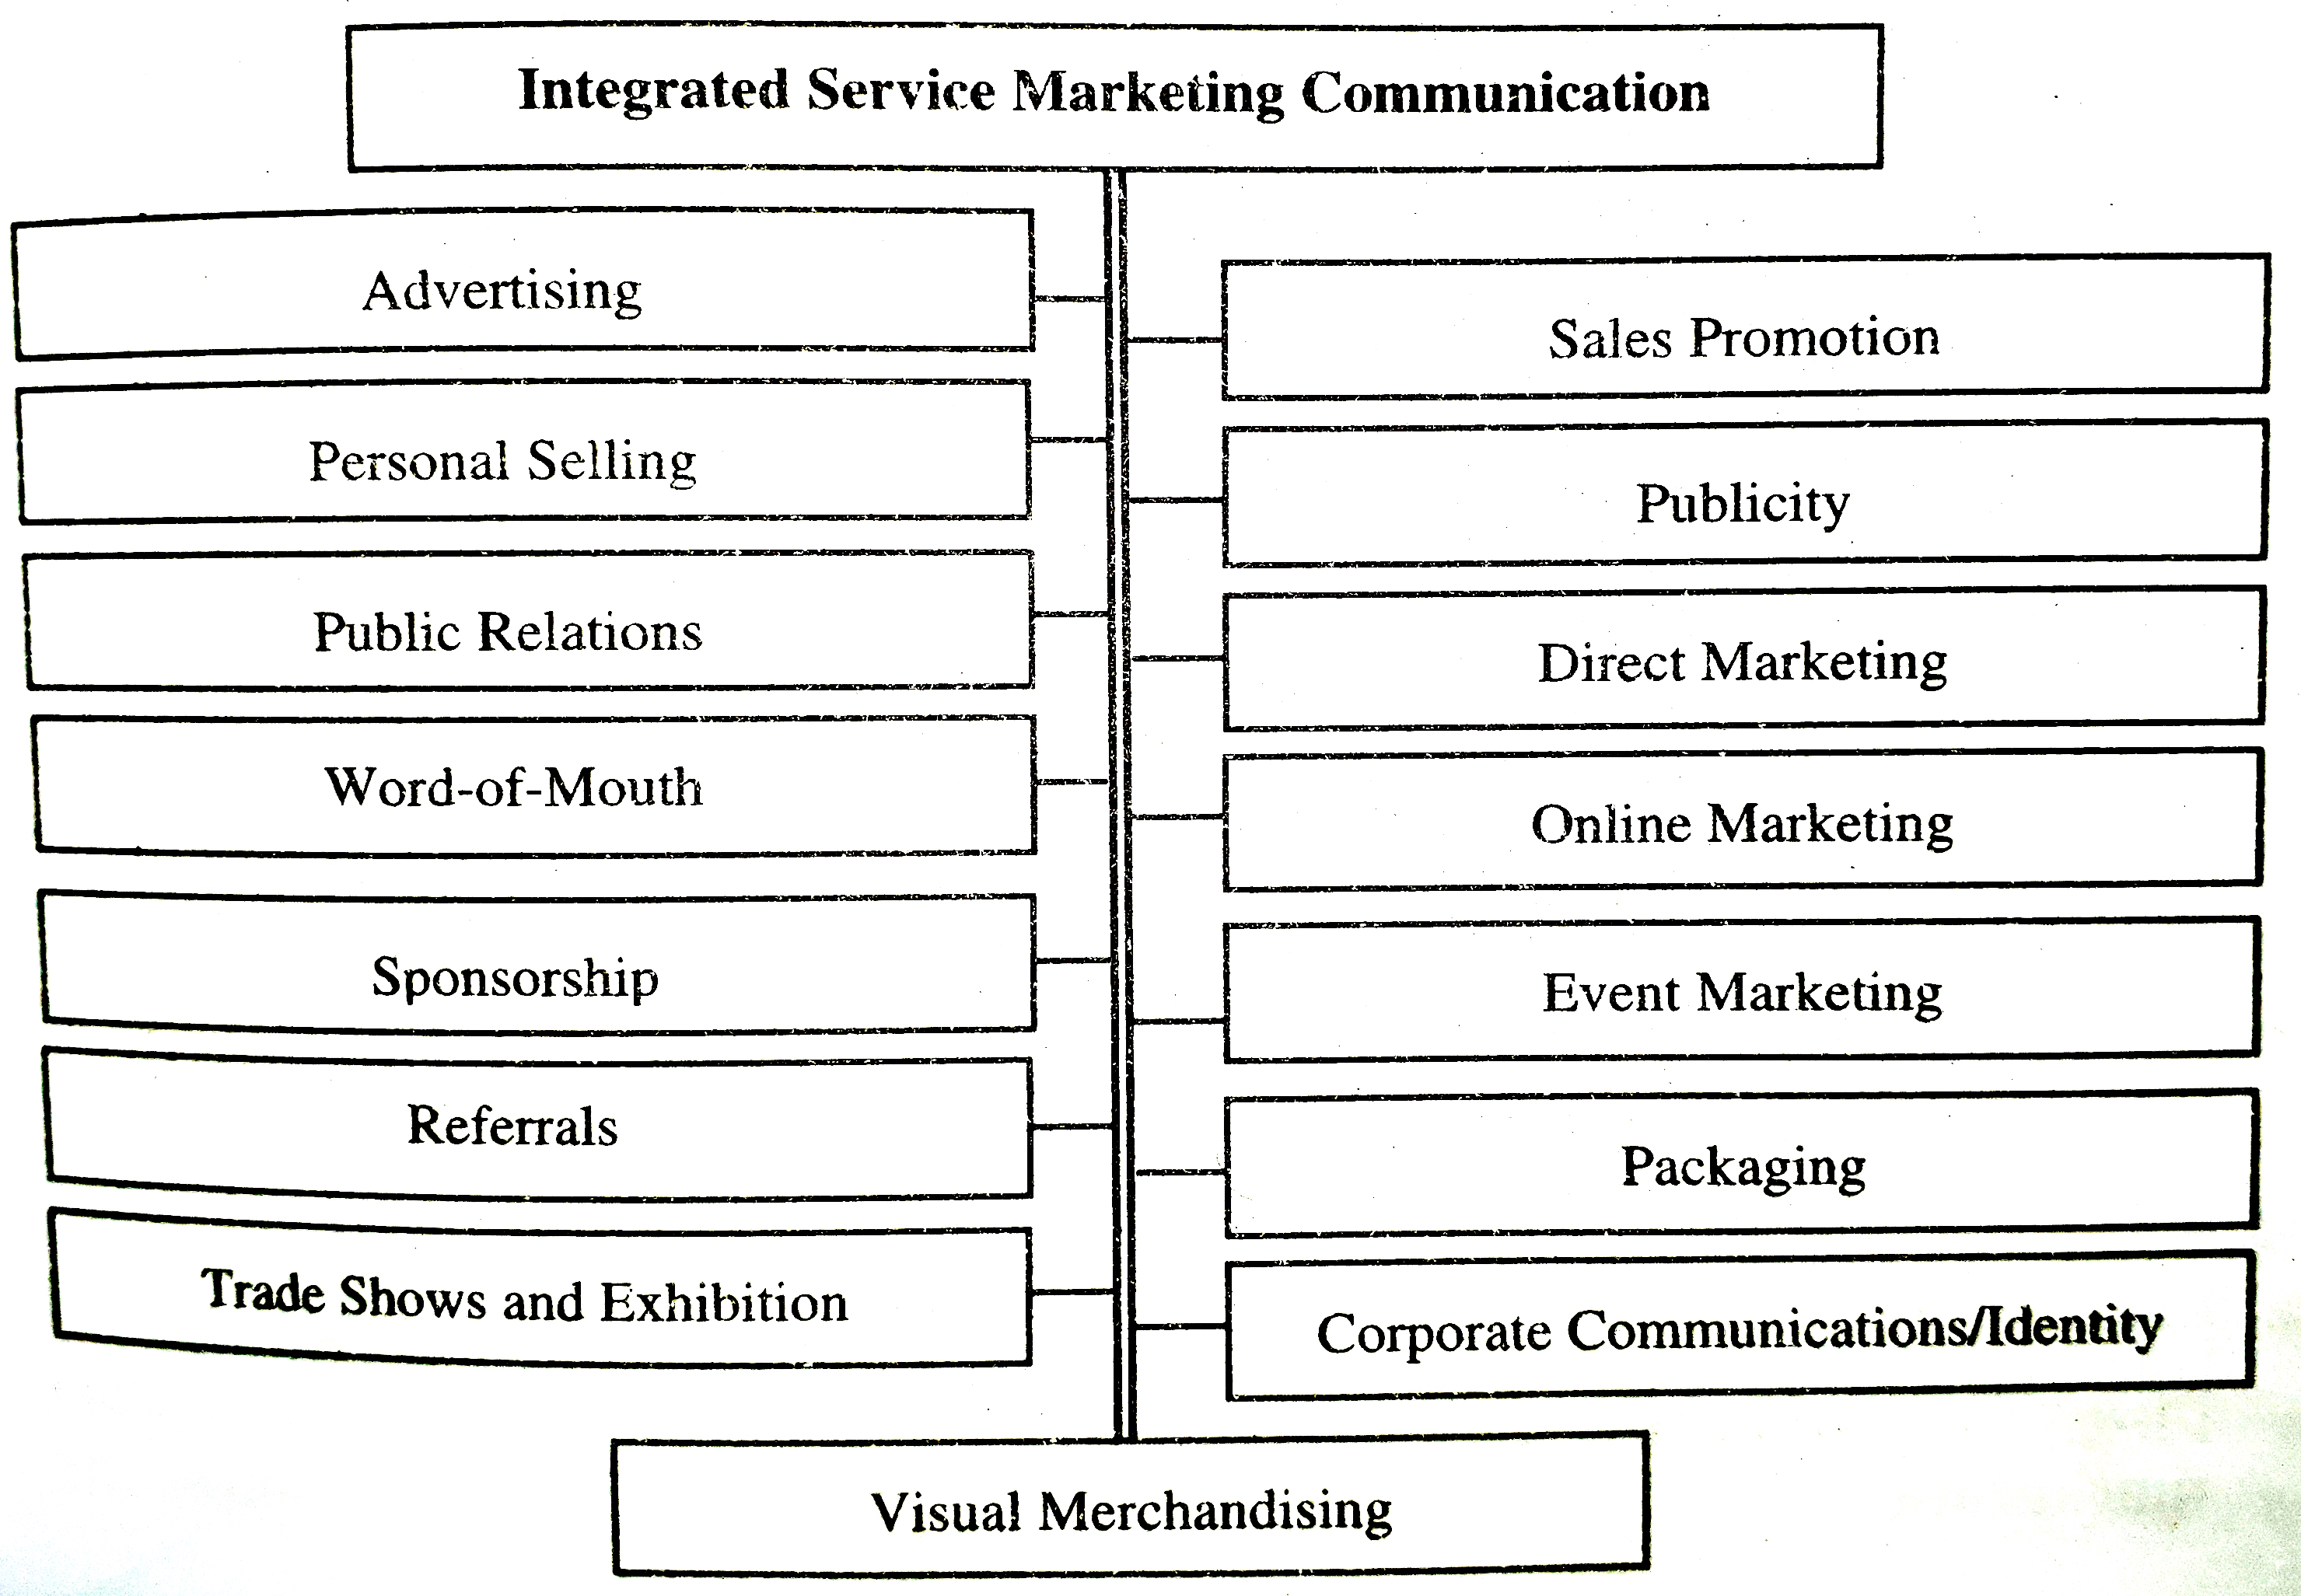 Integrated Service Marketing Communication